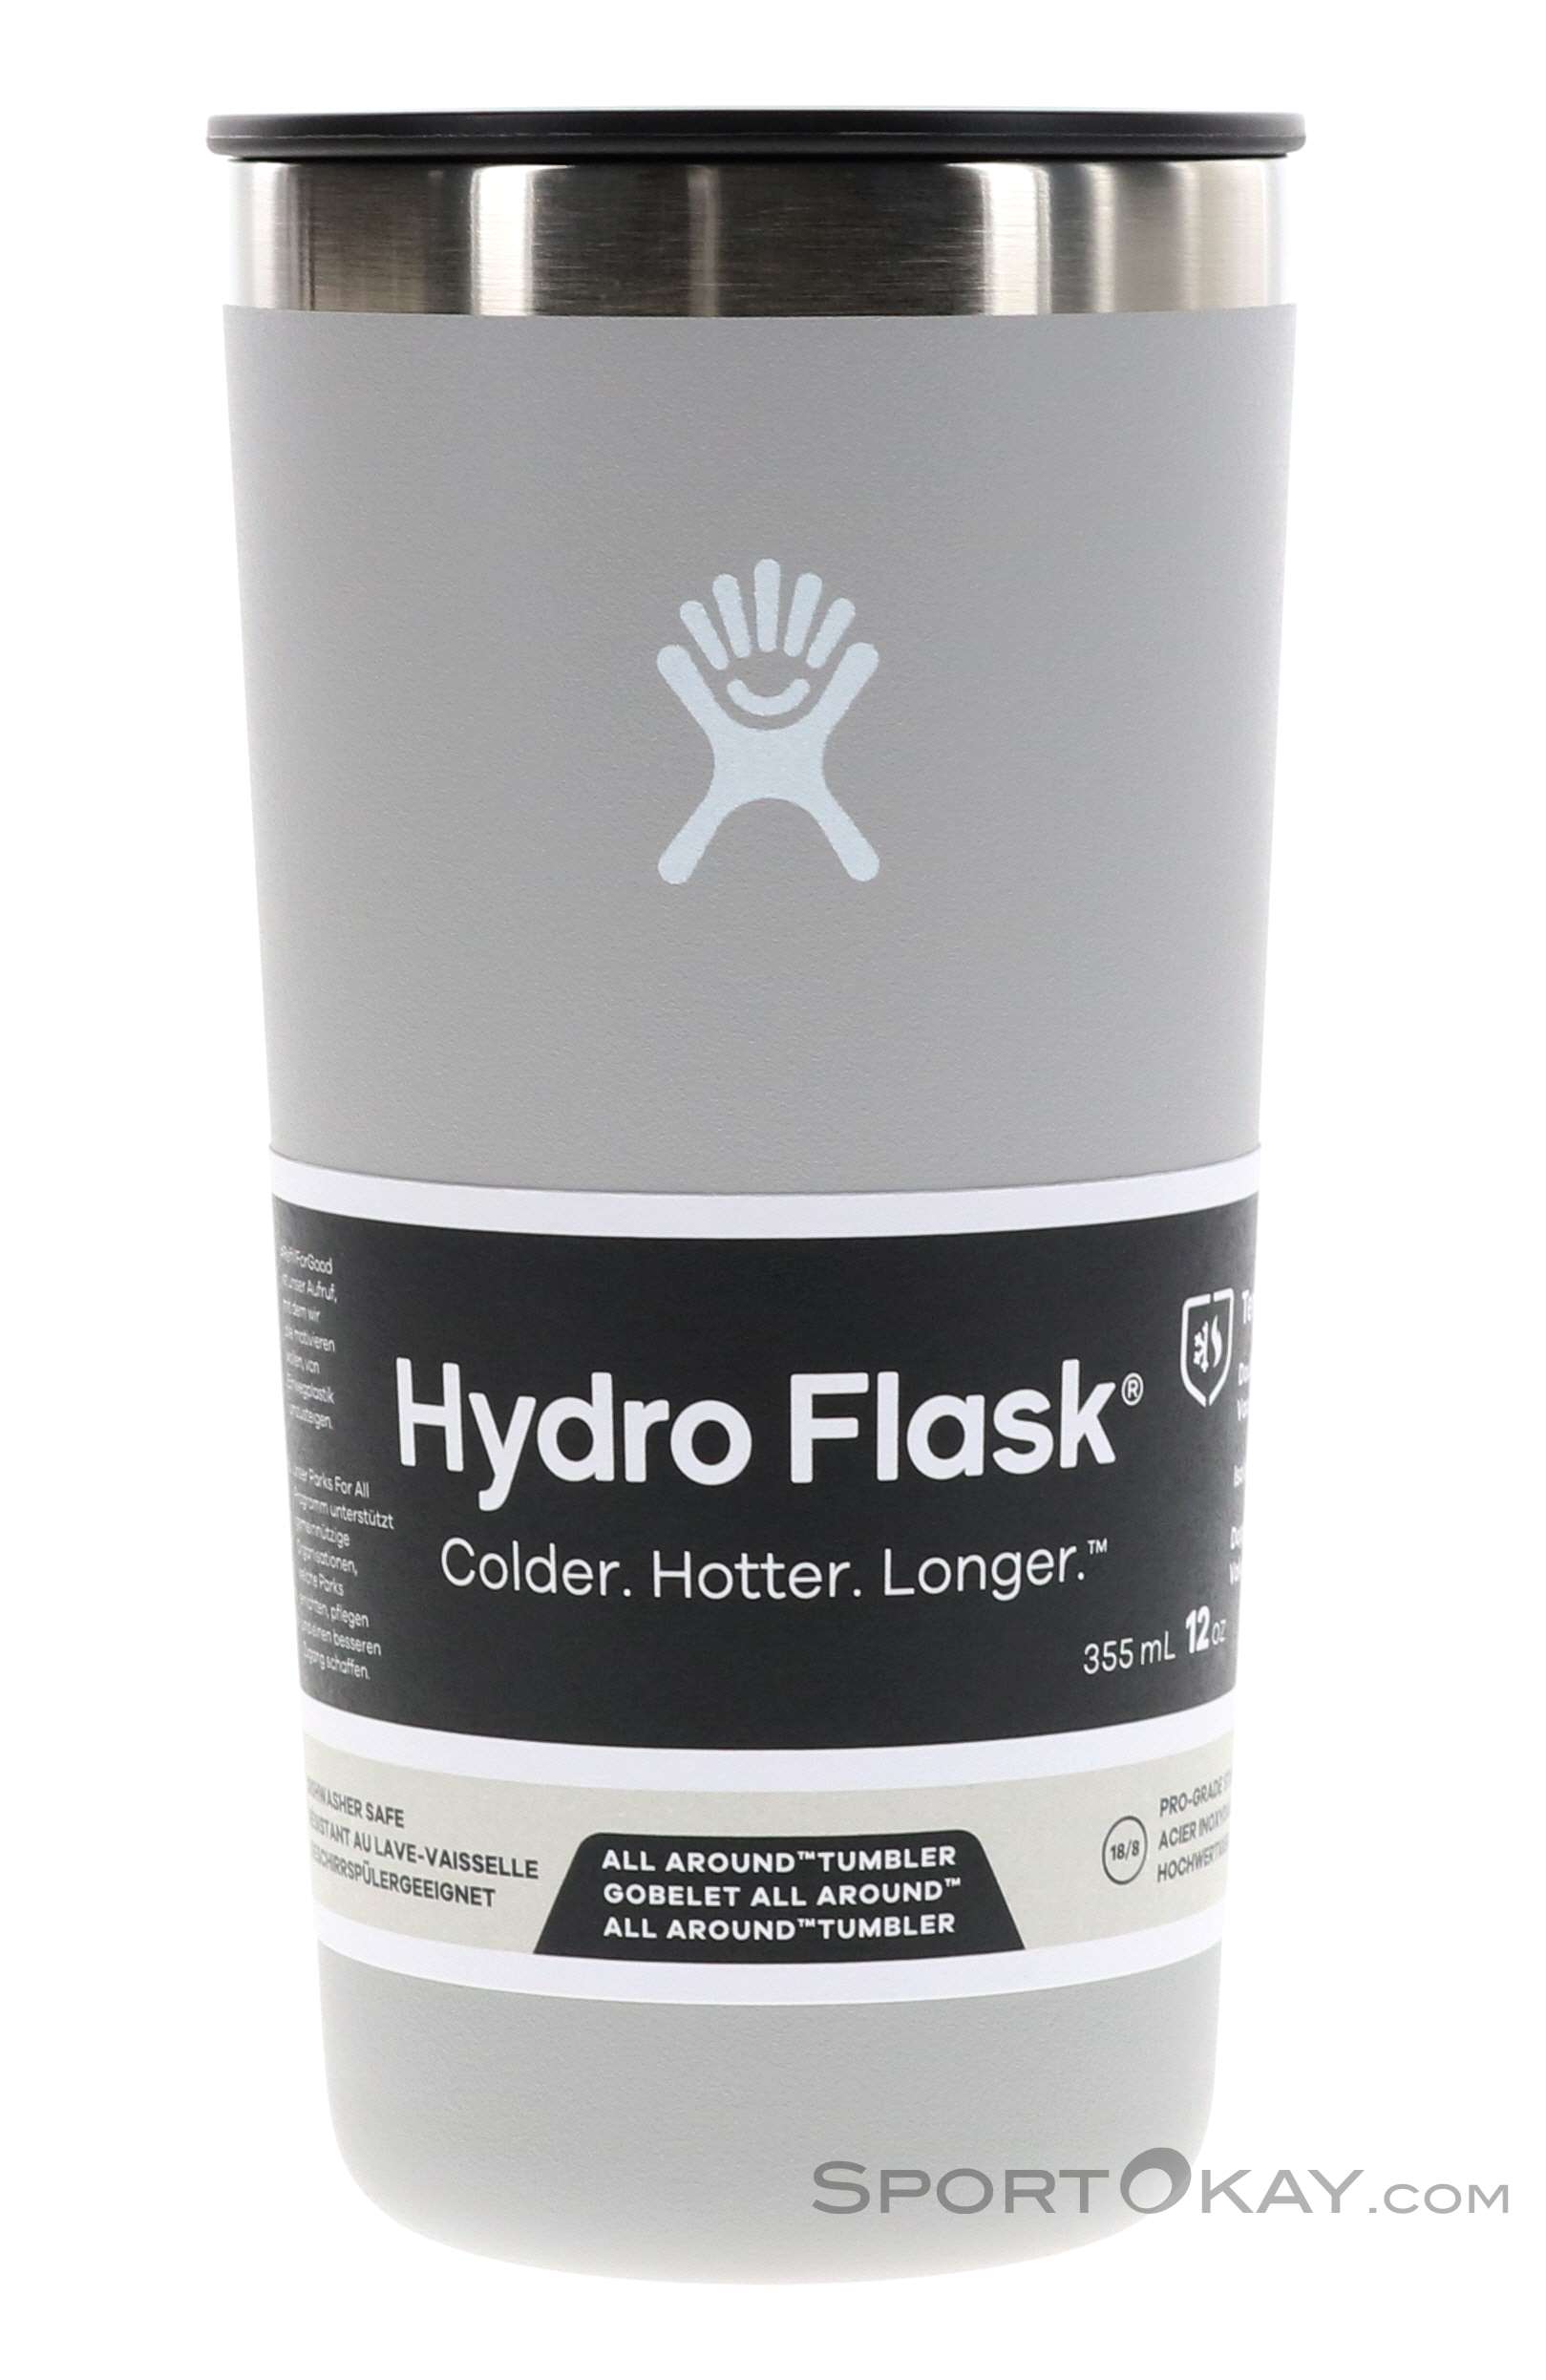 Hydro Flask 12 oz All Around Tumbler Black : Home  